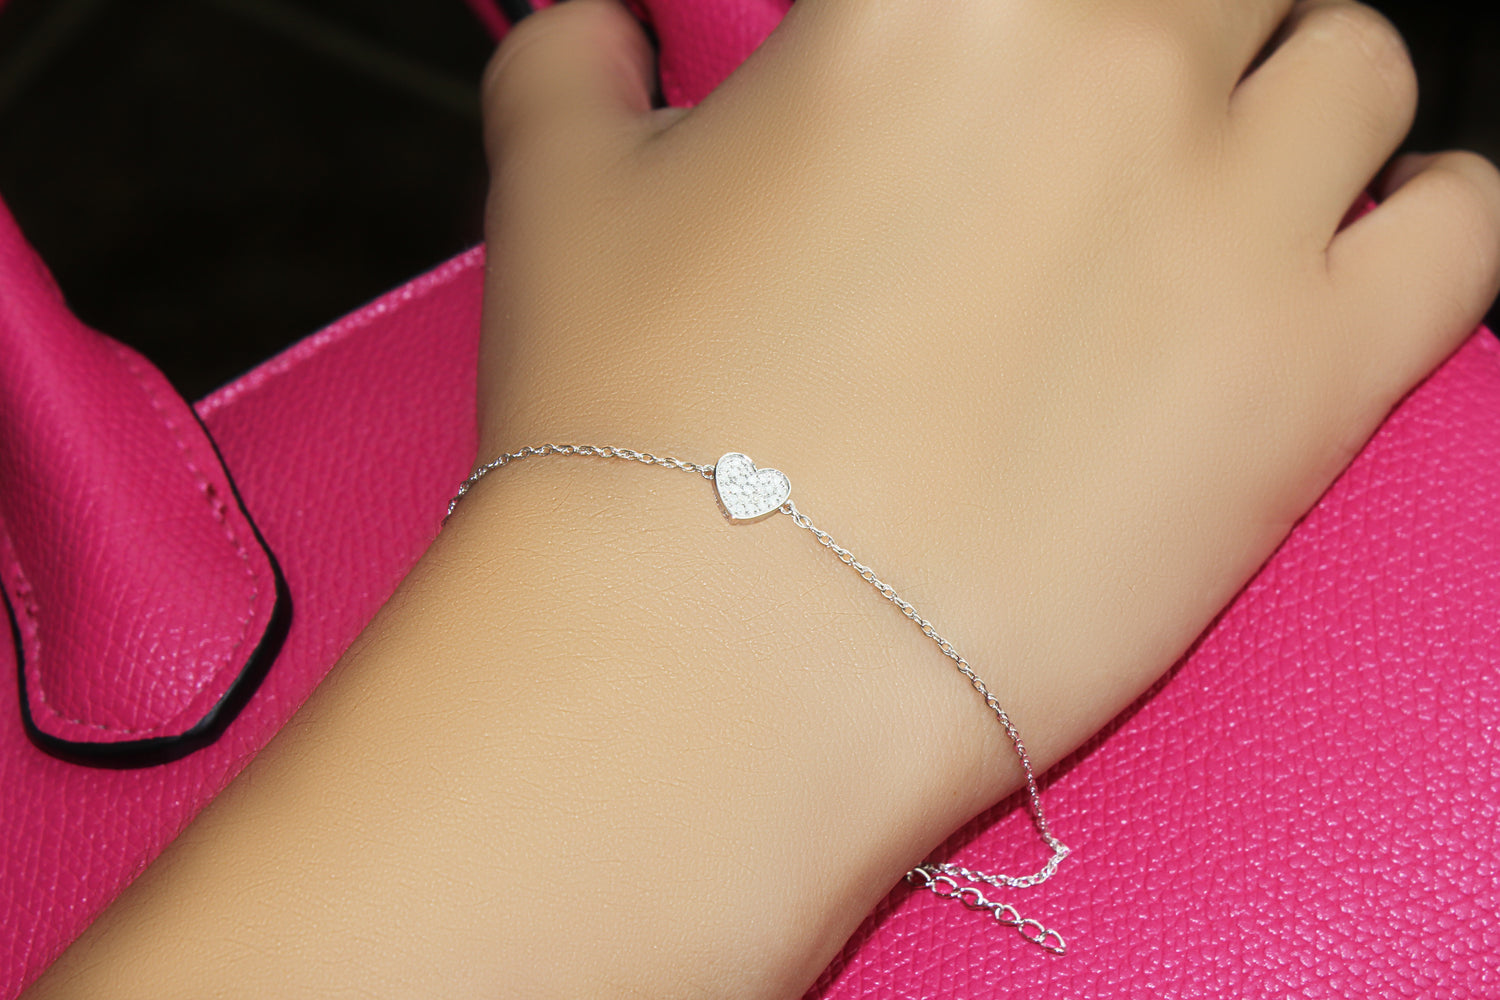 Endless Heart Pink Bracelet 14K